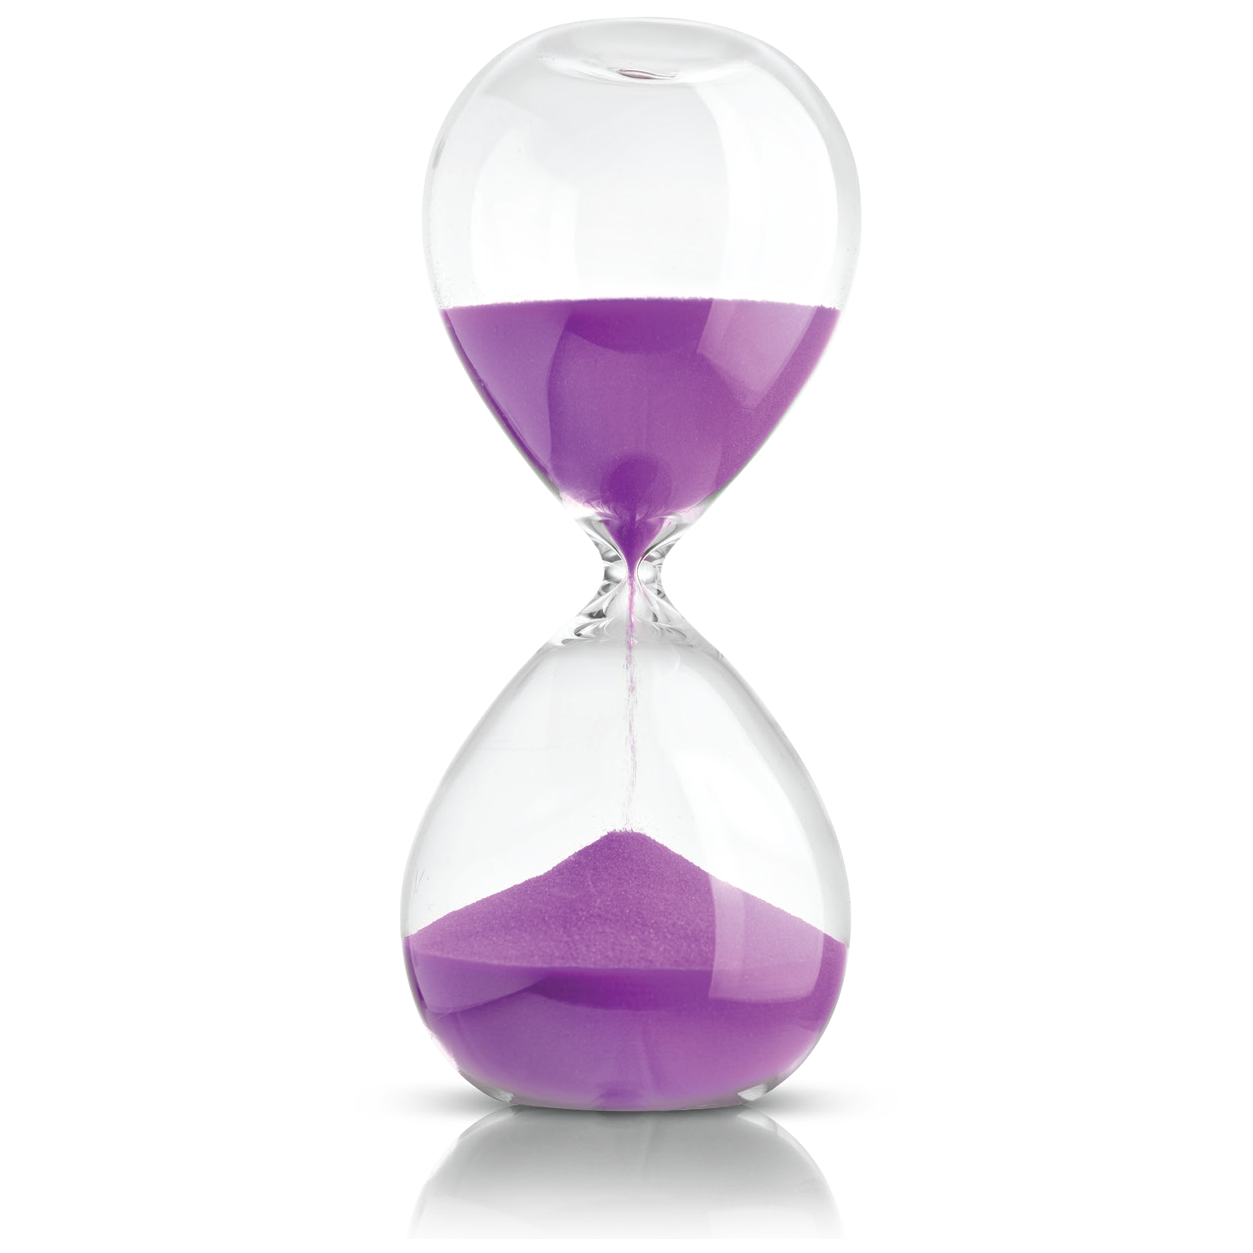 An hour glass with purple sand